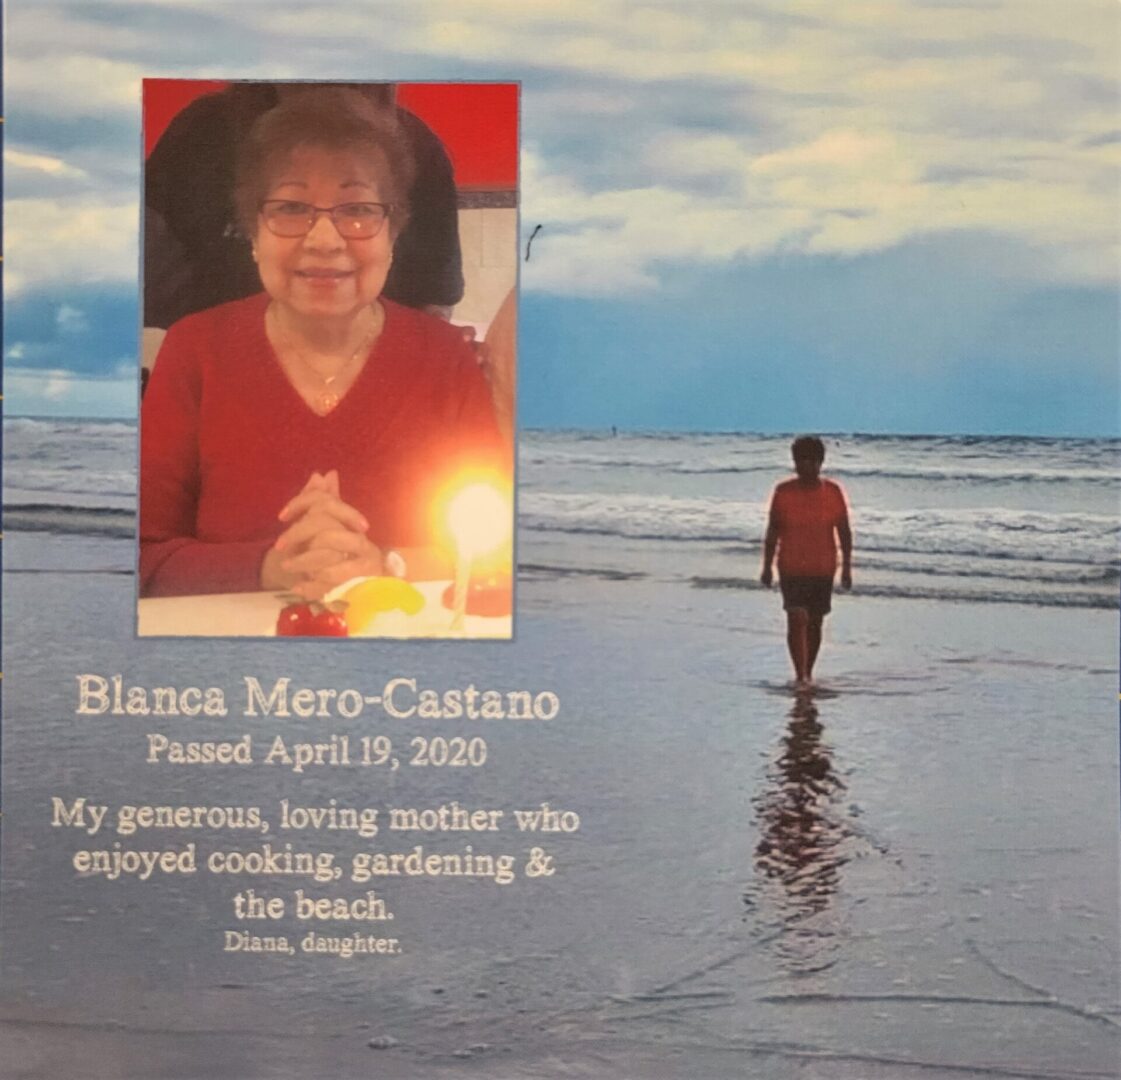 IN MEMORY OF BLANCA MERO-CASTANO - DIED APRIL 19, 2020